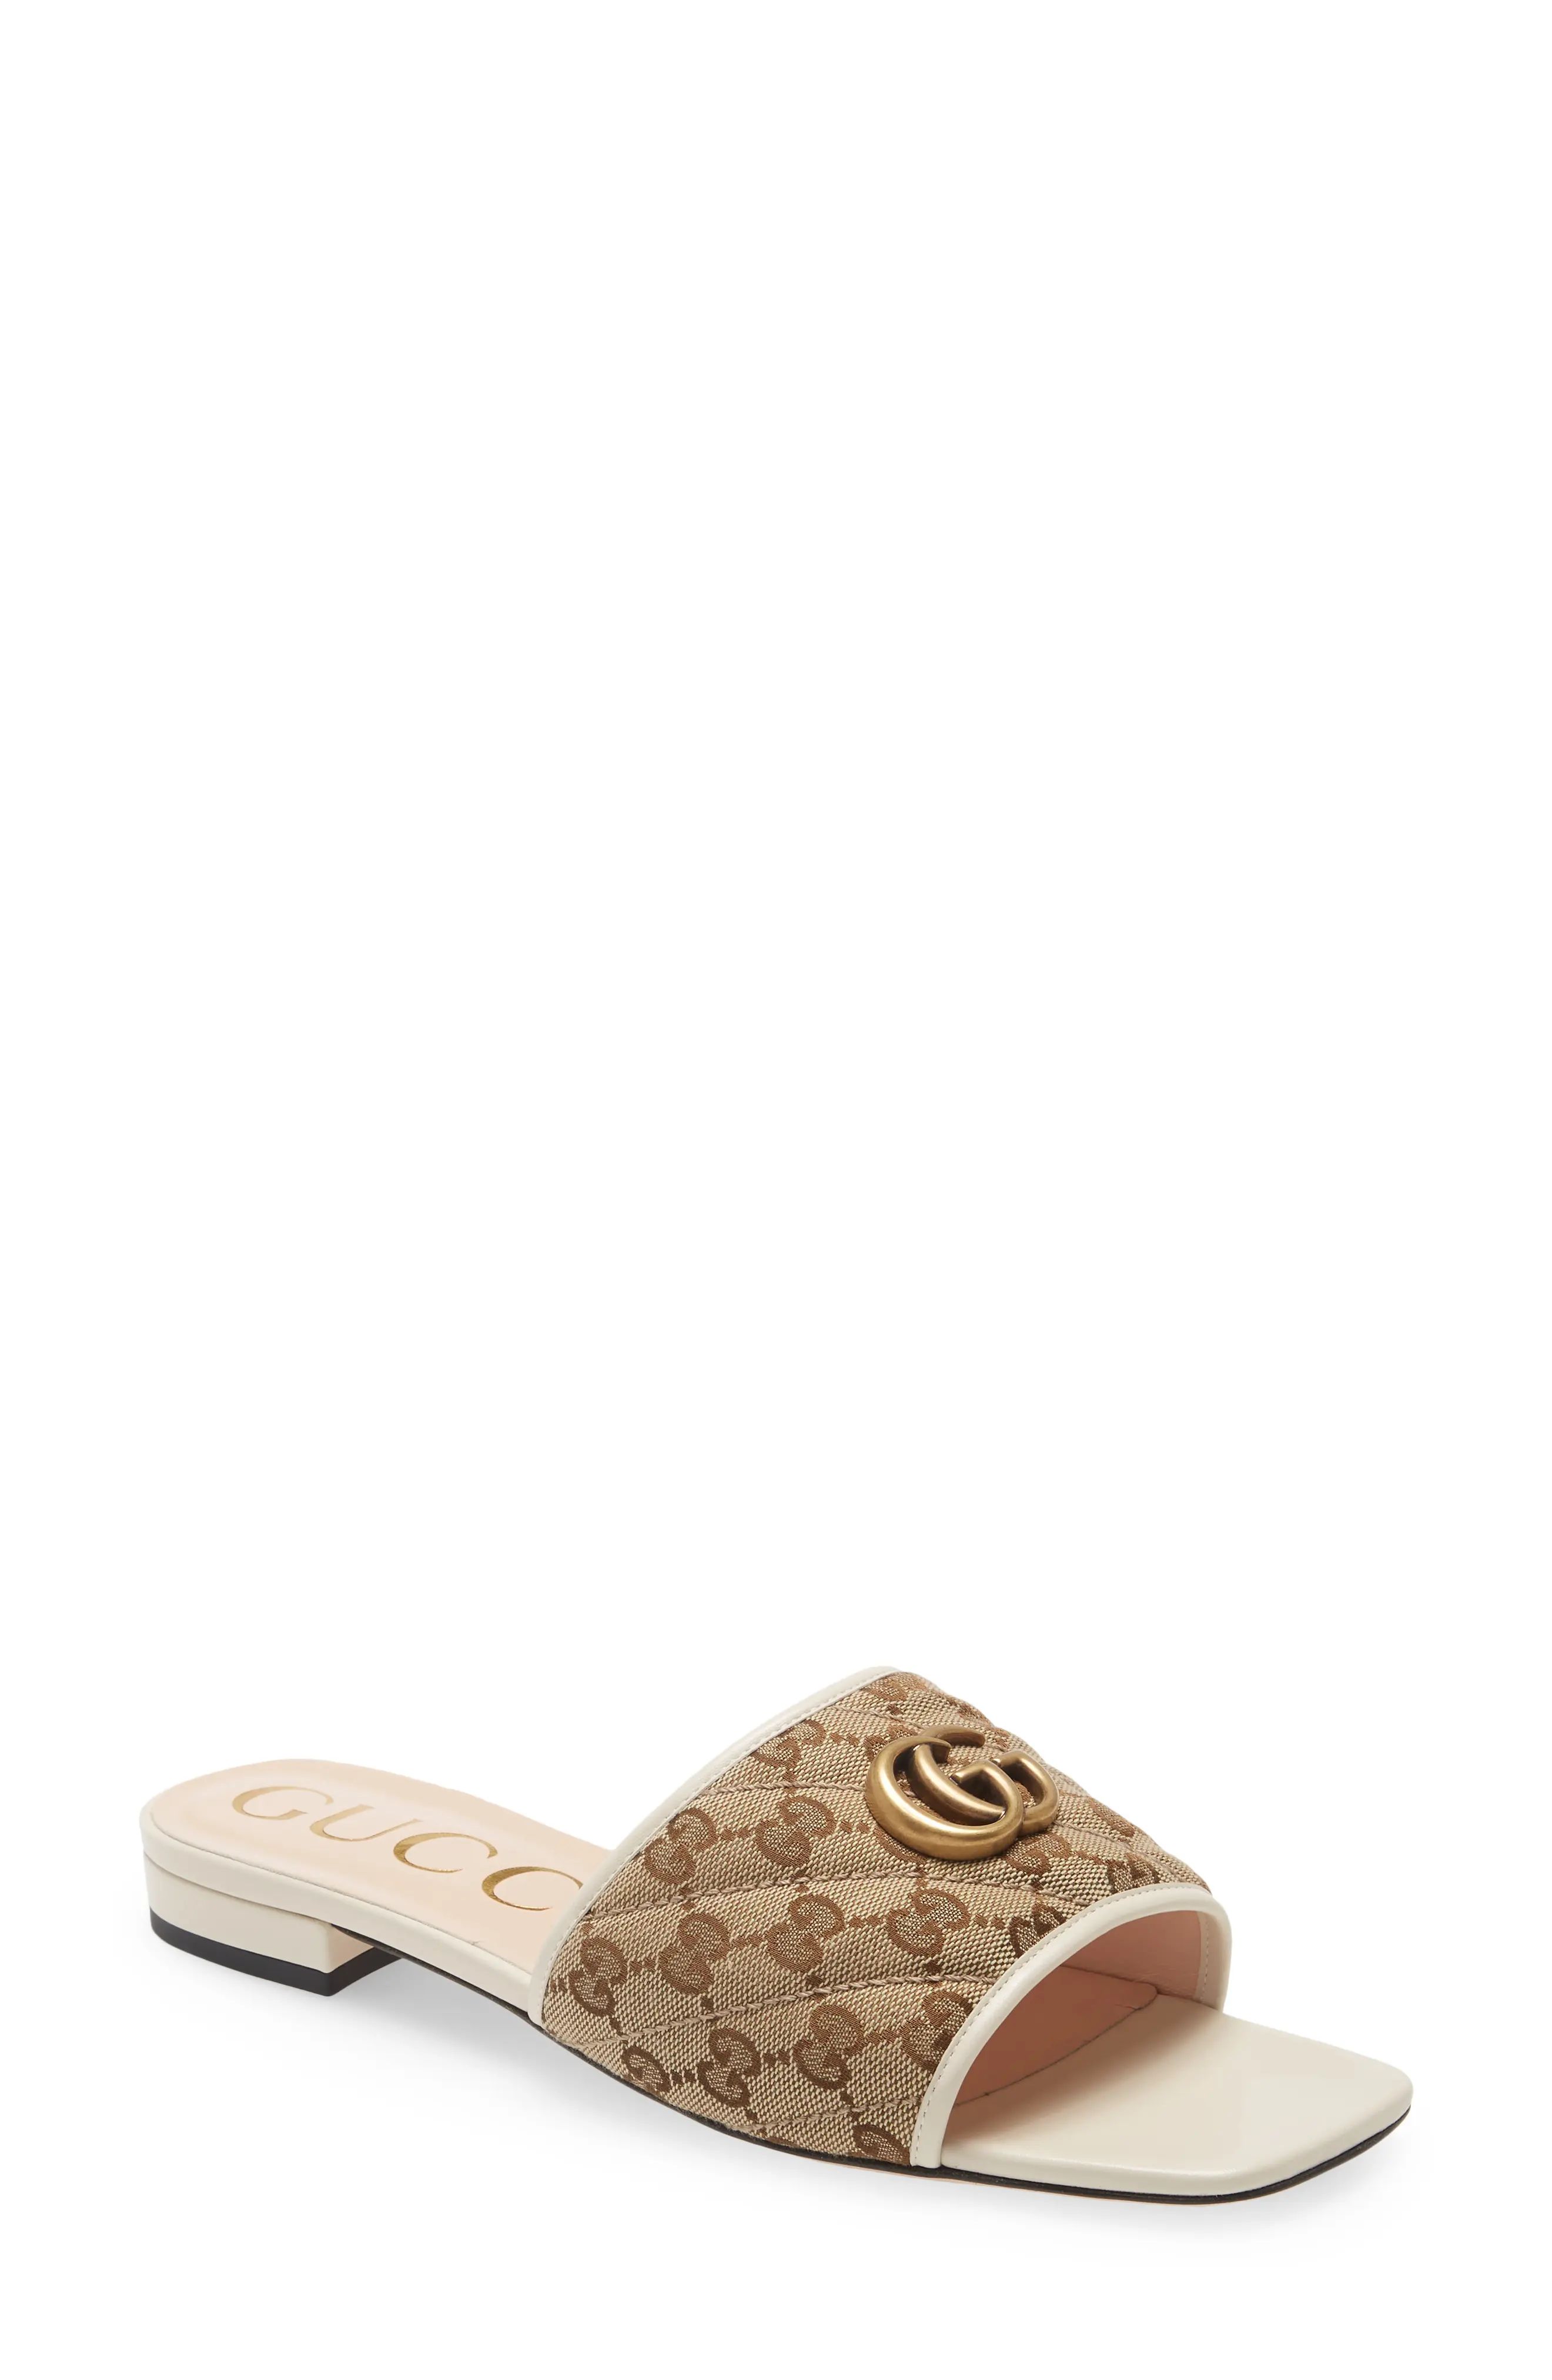 Gucci Jolie Slide Sandal in Beige-Ebony/My White at Nordstrom, Size 10Us | Nordstrom